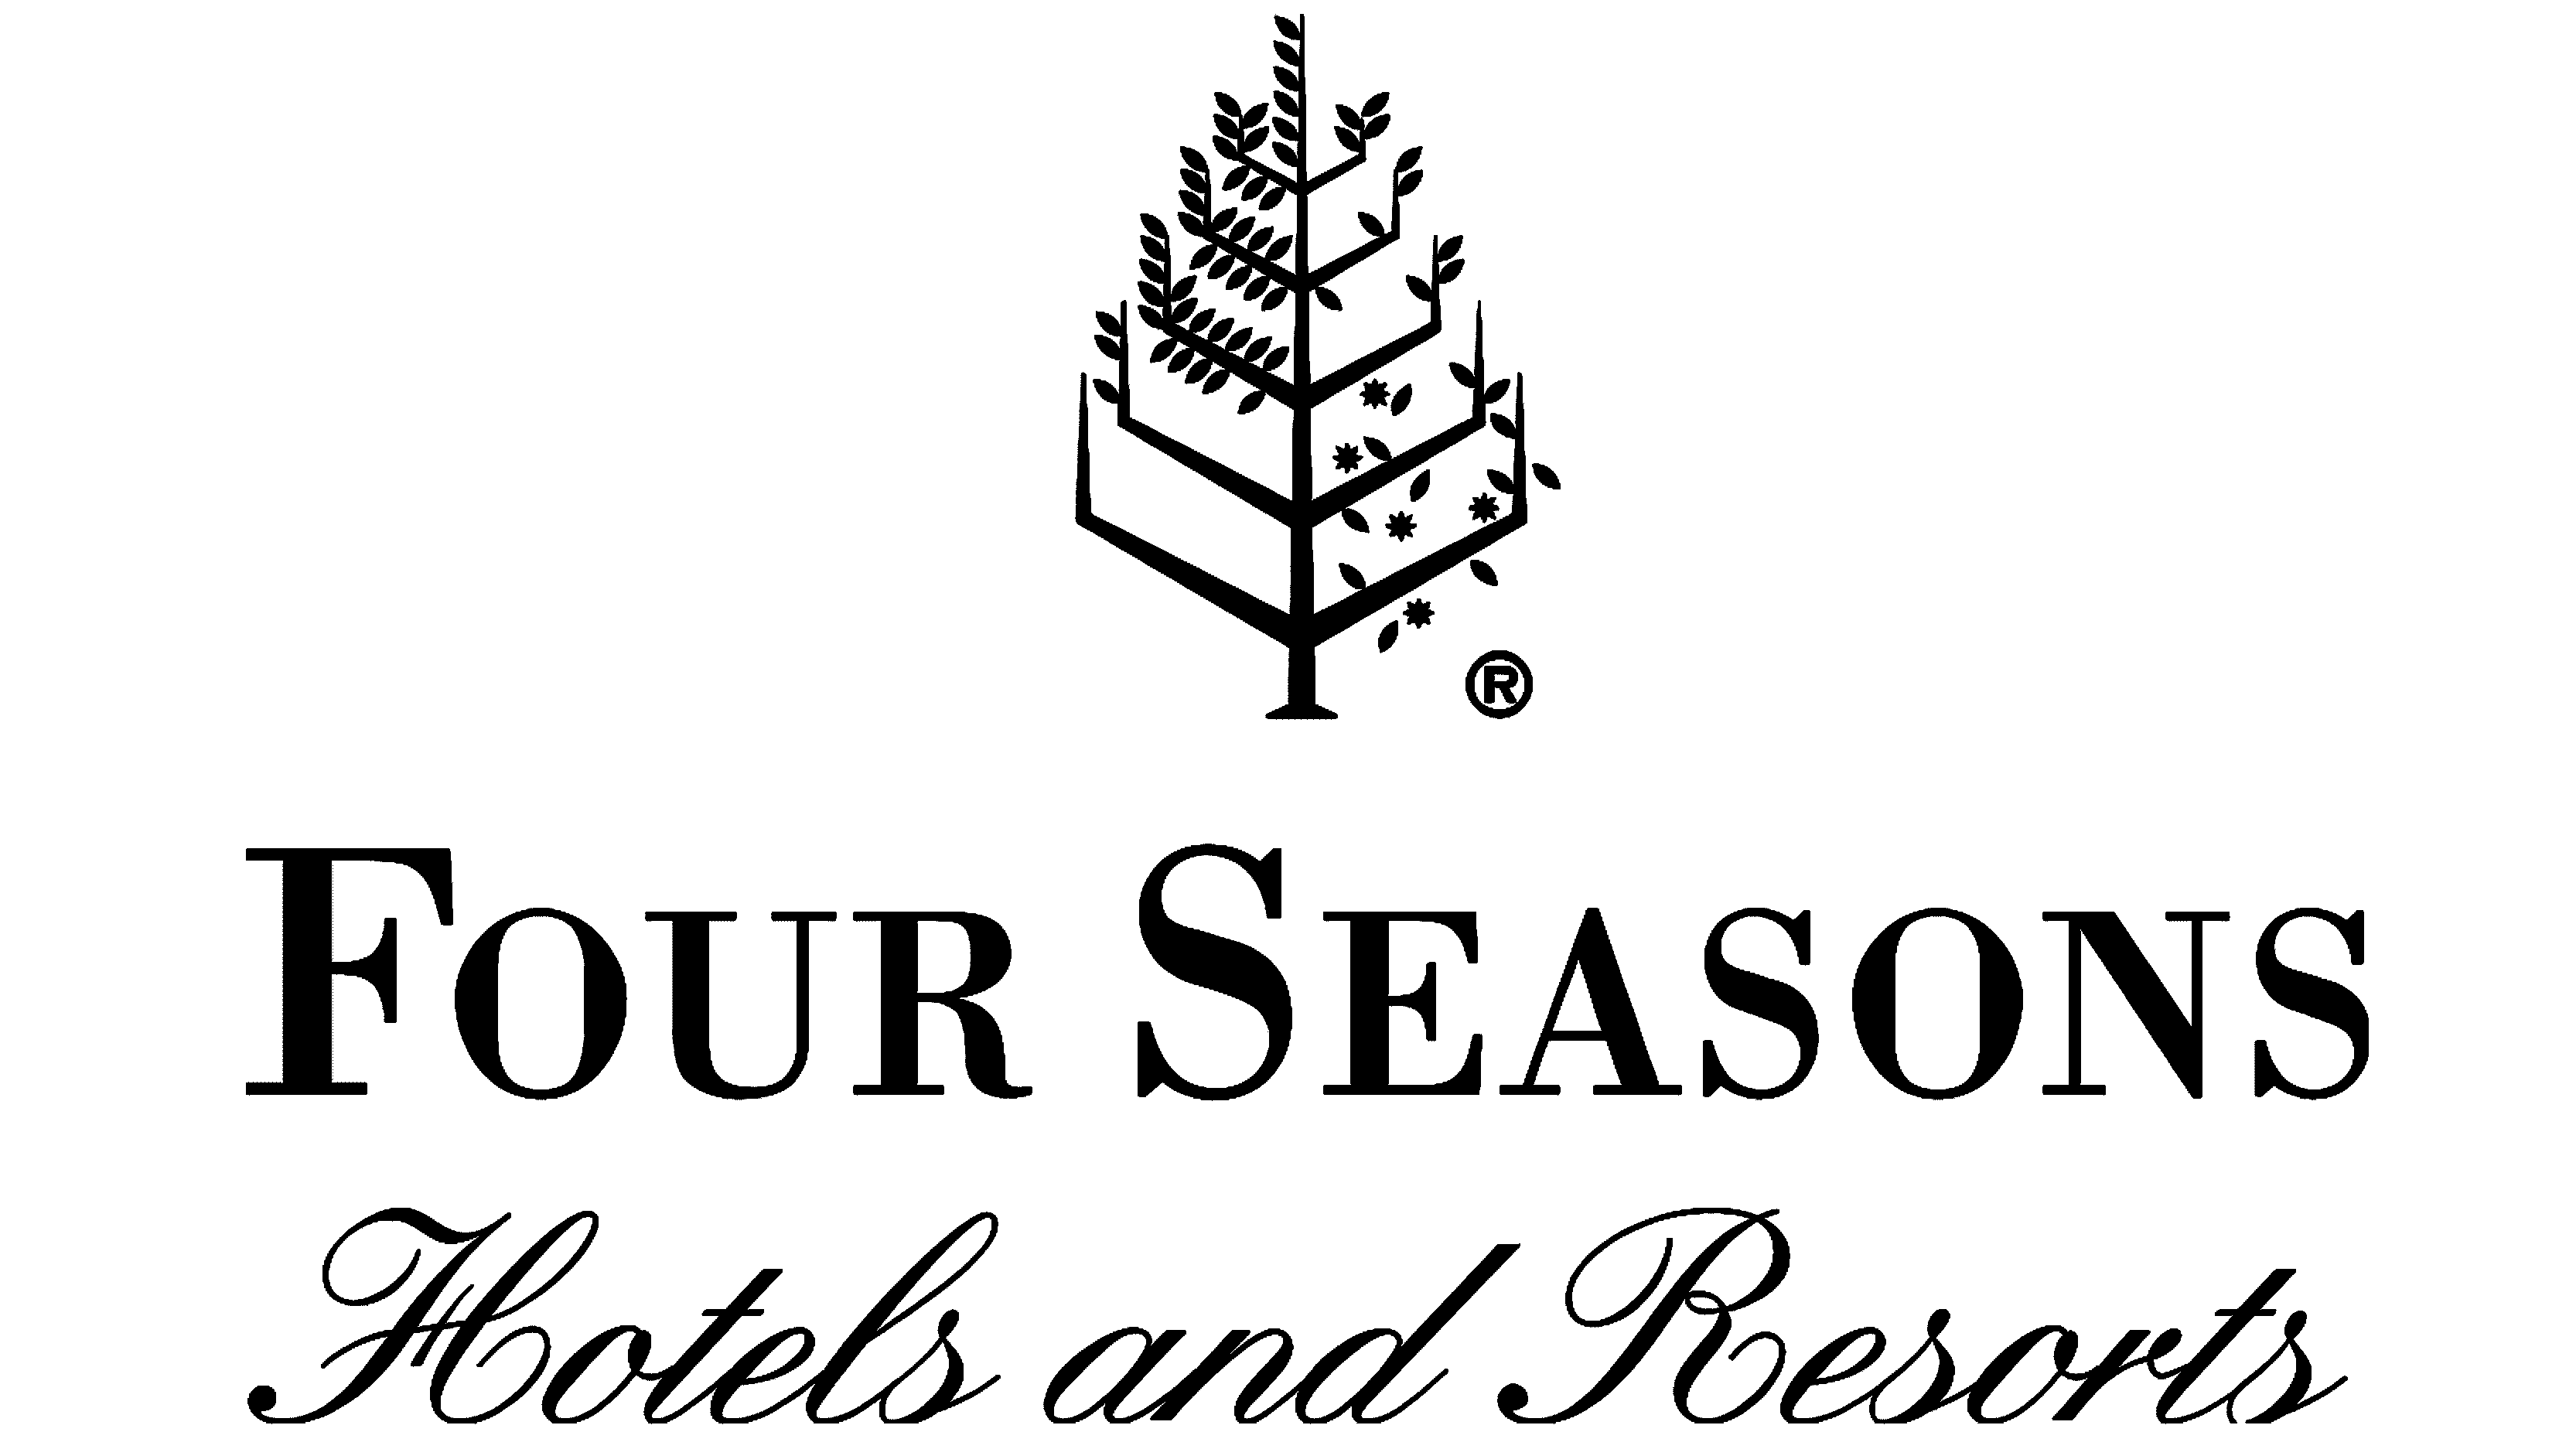 four seasons hotel sign